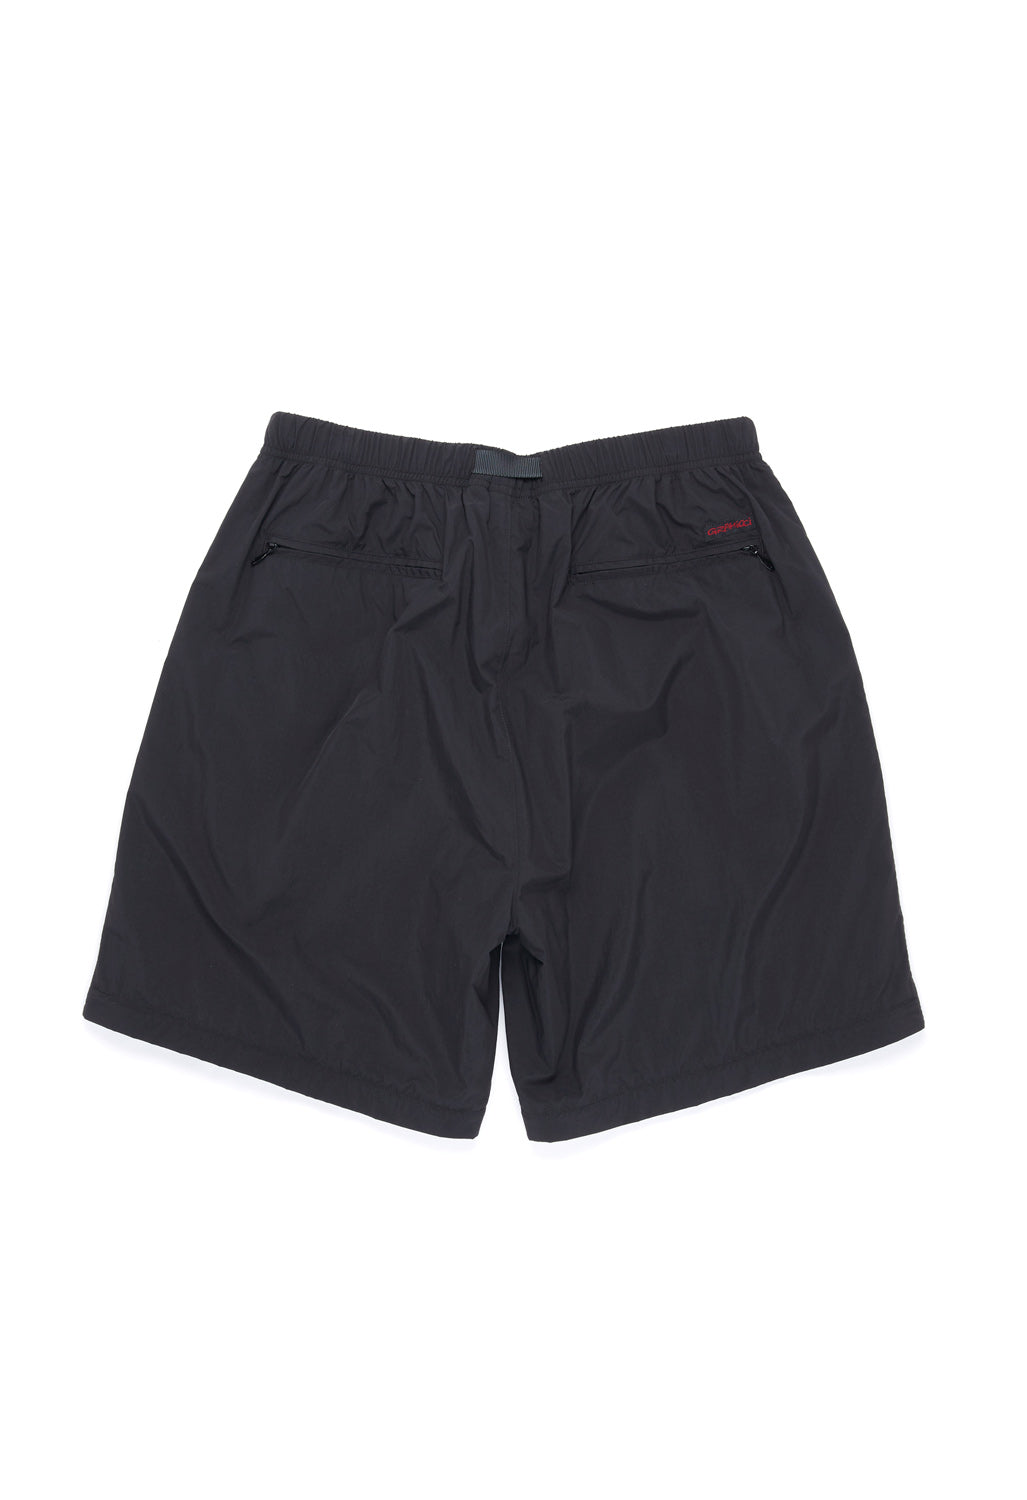 Gramicci Men's Convertible Trail Pants - Black